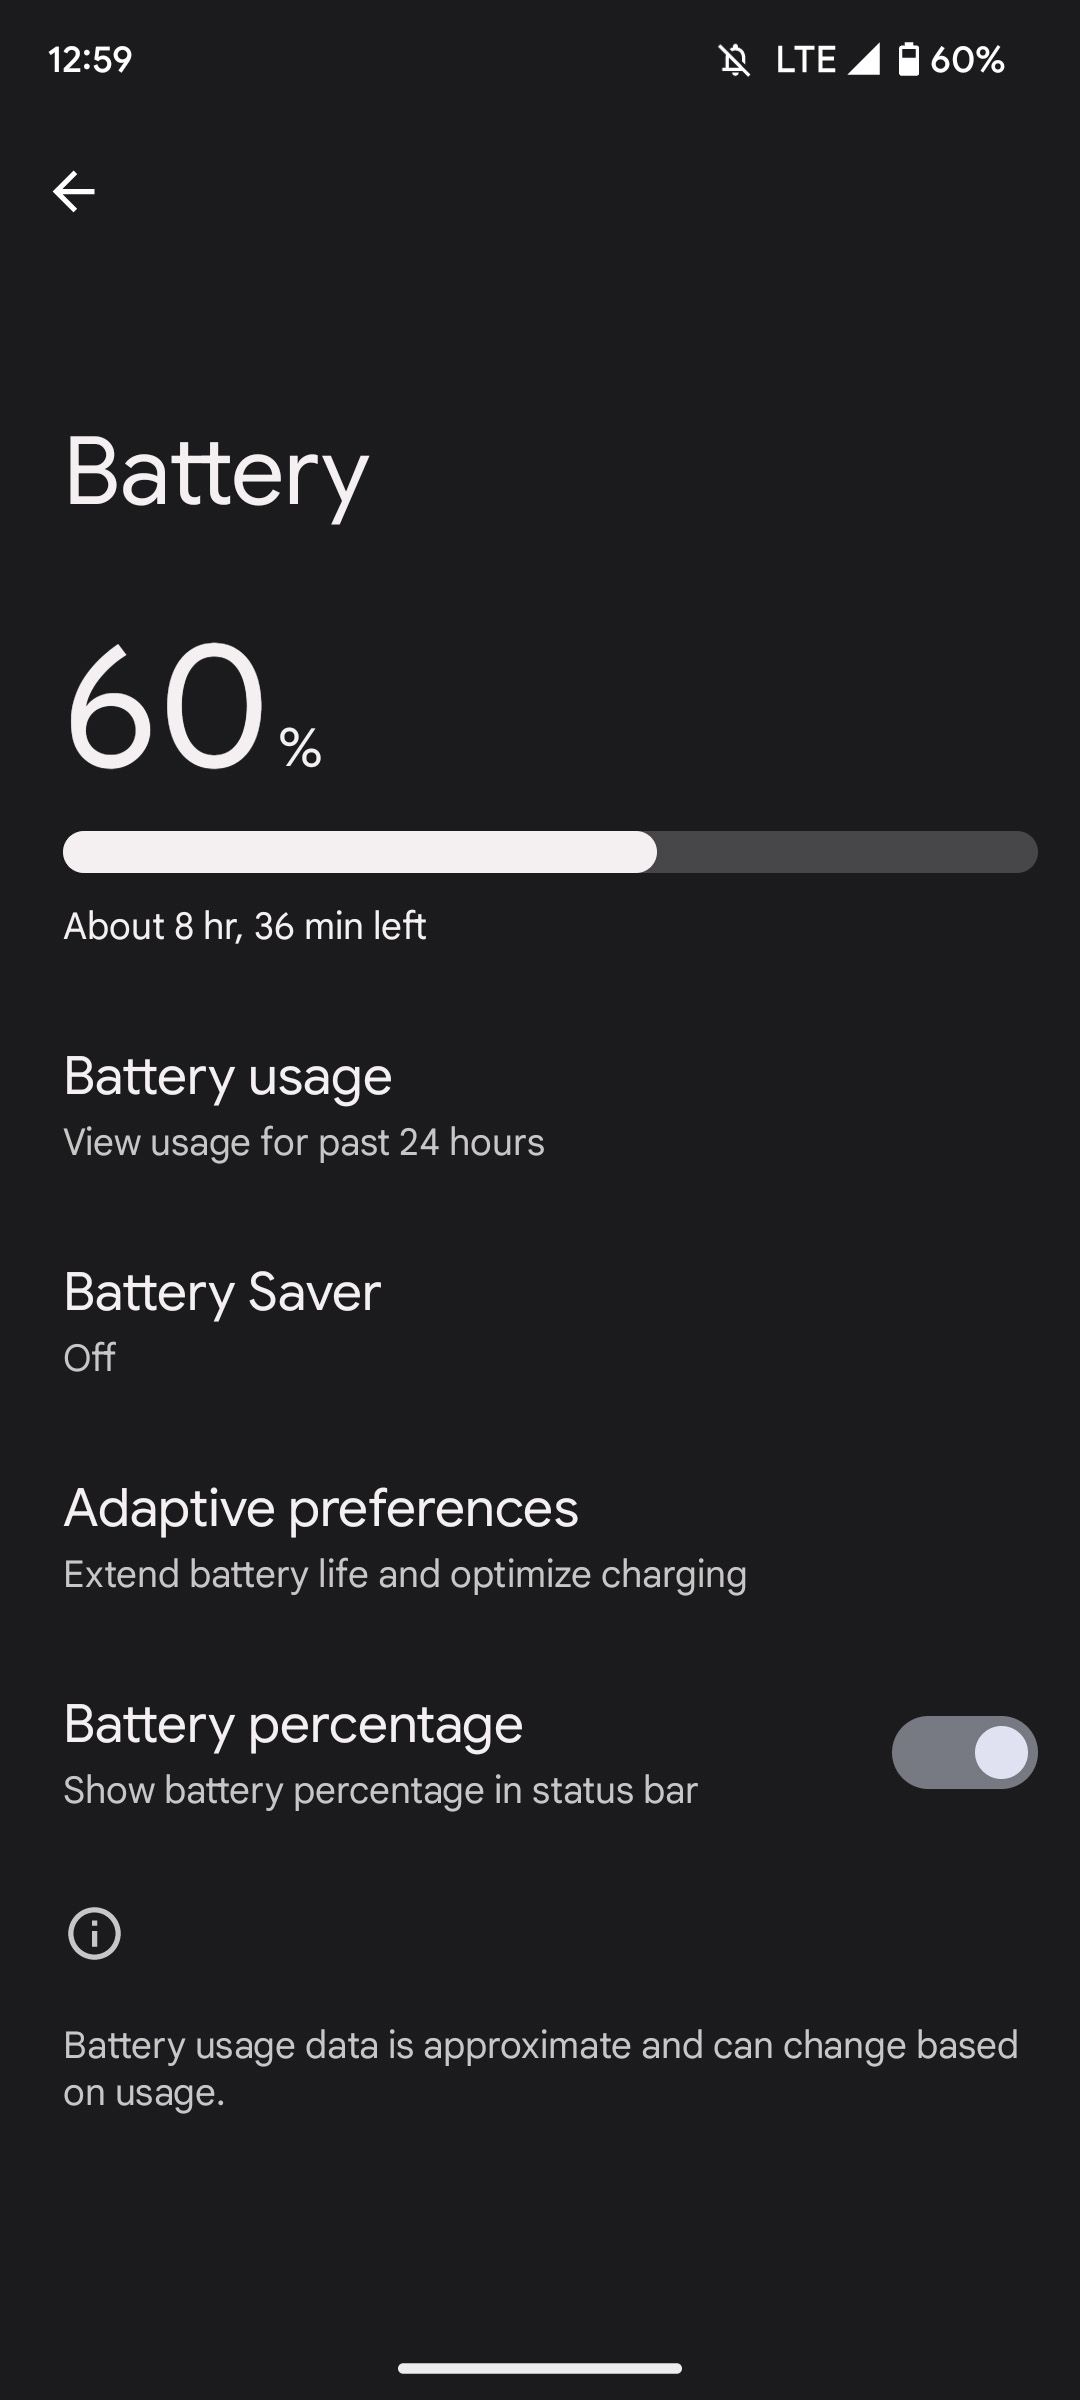 Adaptive preference option in battery menu